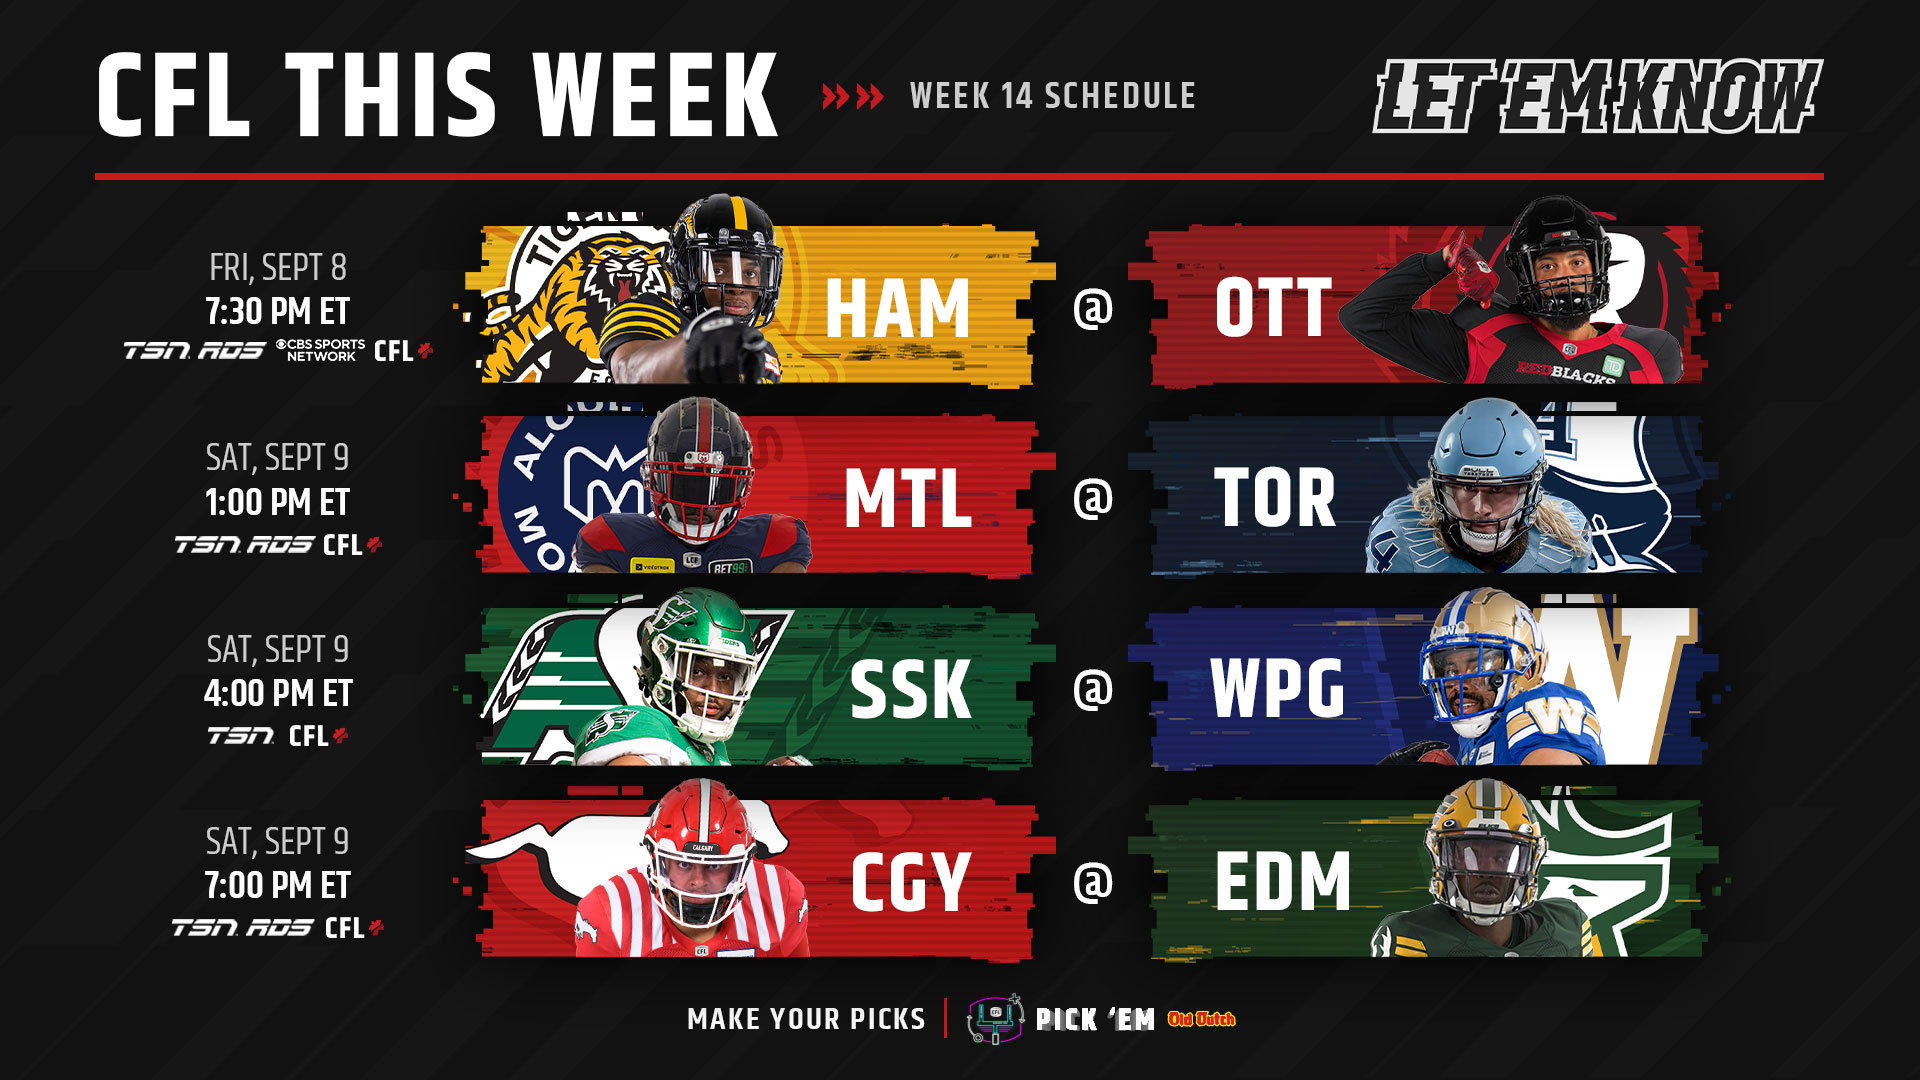 CFL Schedule Tiger-Cats vs REDBLACKS, Odds, CFL Live Stream Free, CFL Games Today (Friday, September 8)